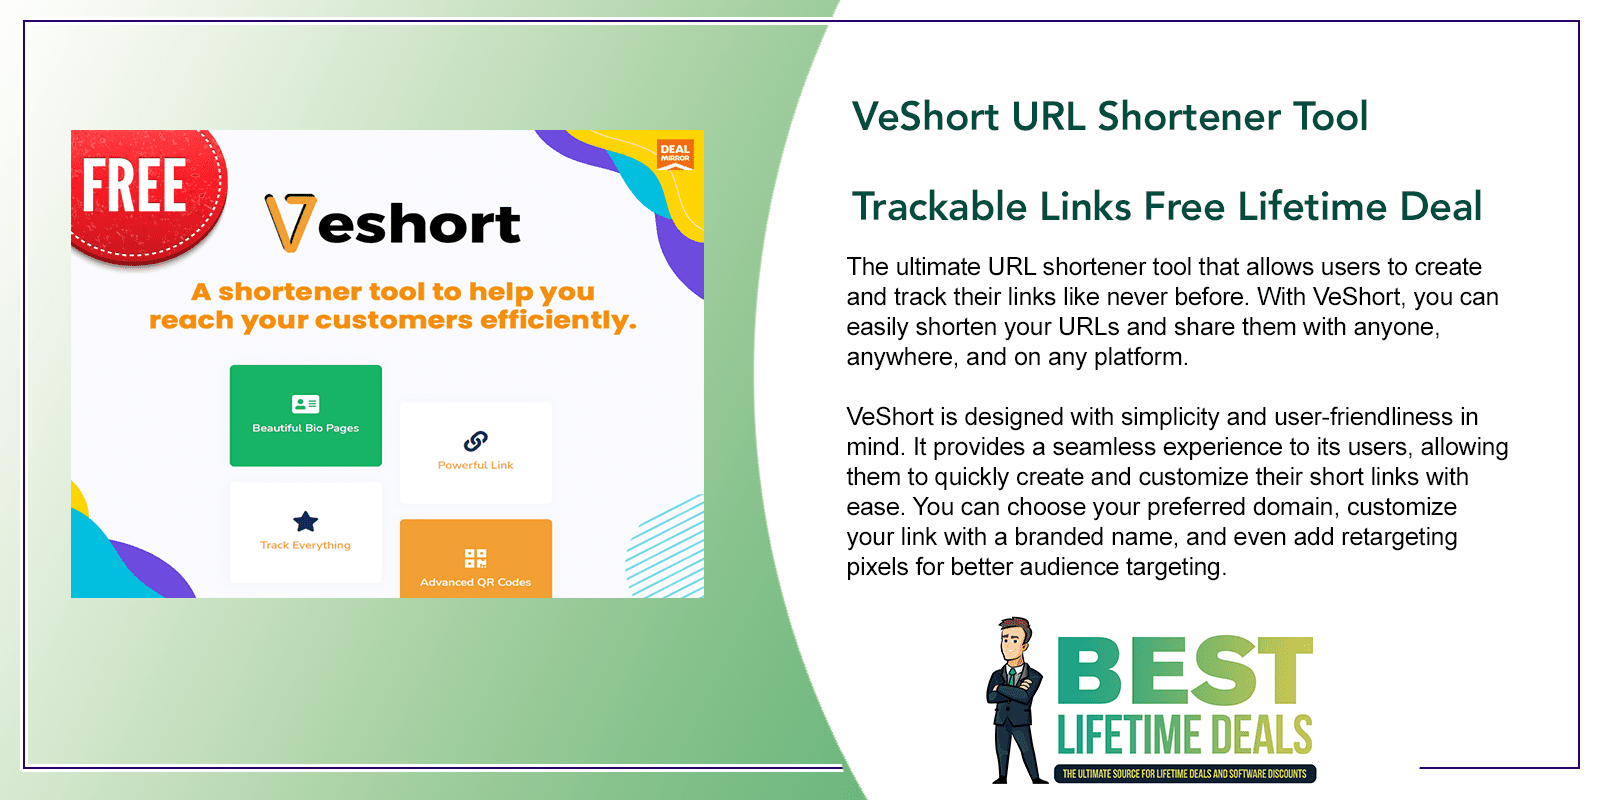 VeShort URL Shortener Tool Trackable Links Free Lifetime Deal Featured Image